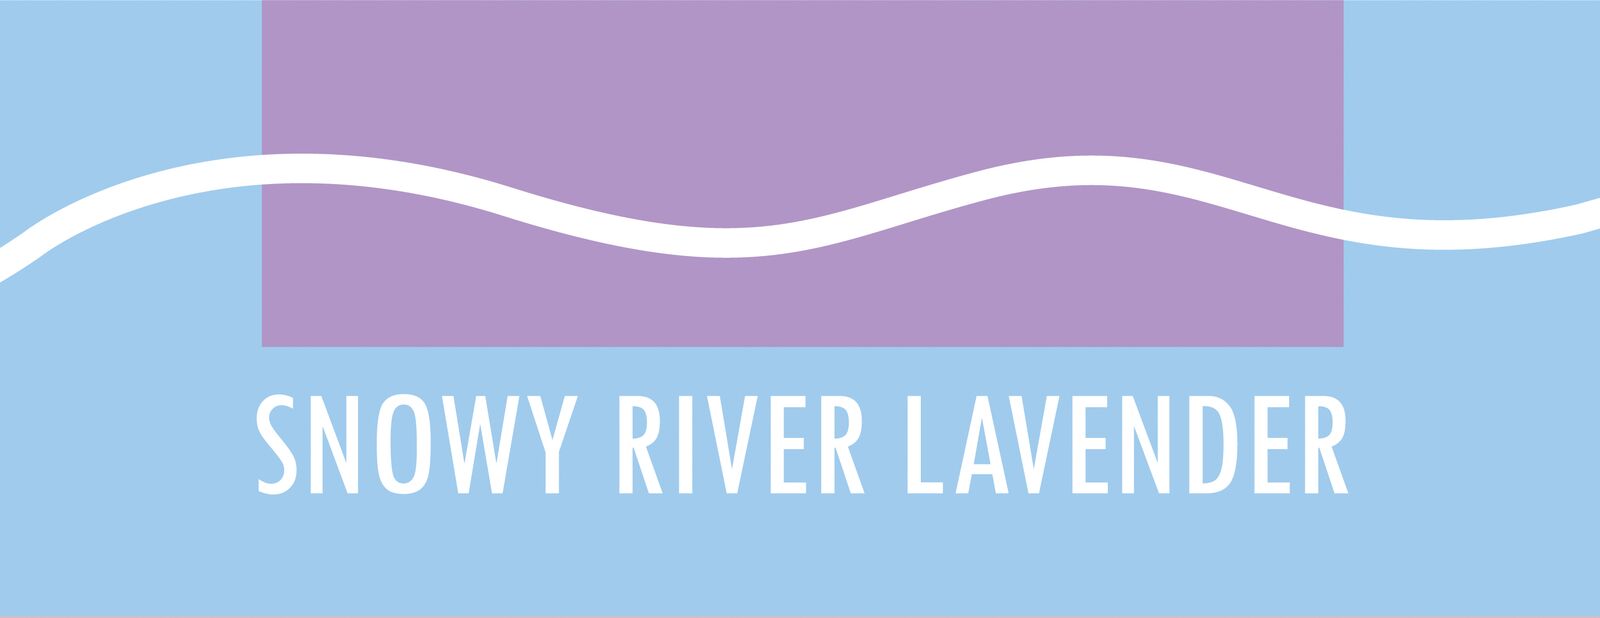 Snowy River Lavender